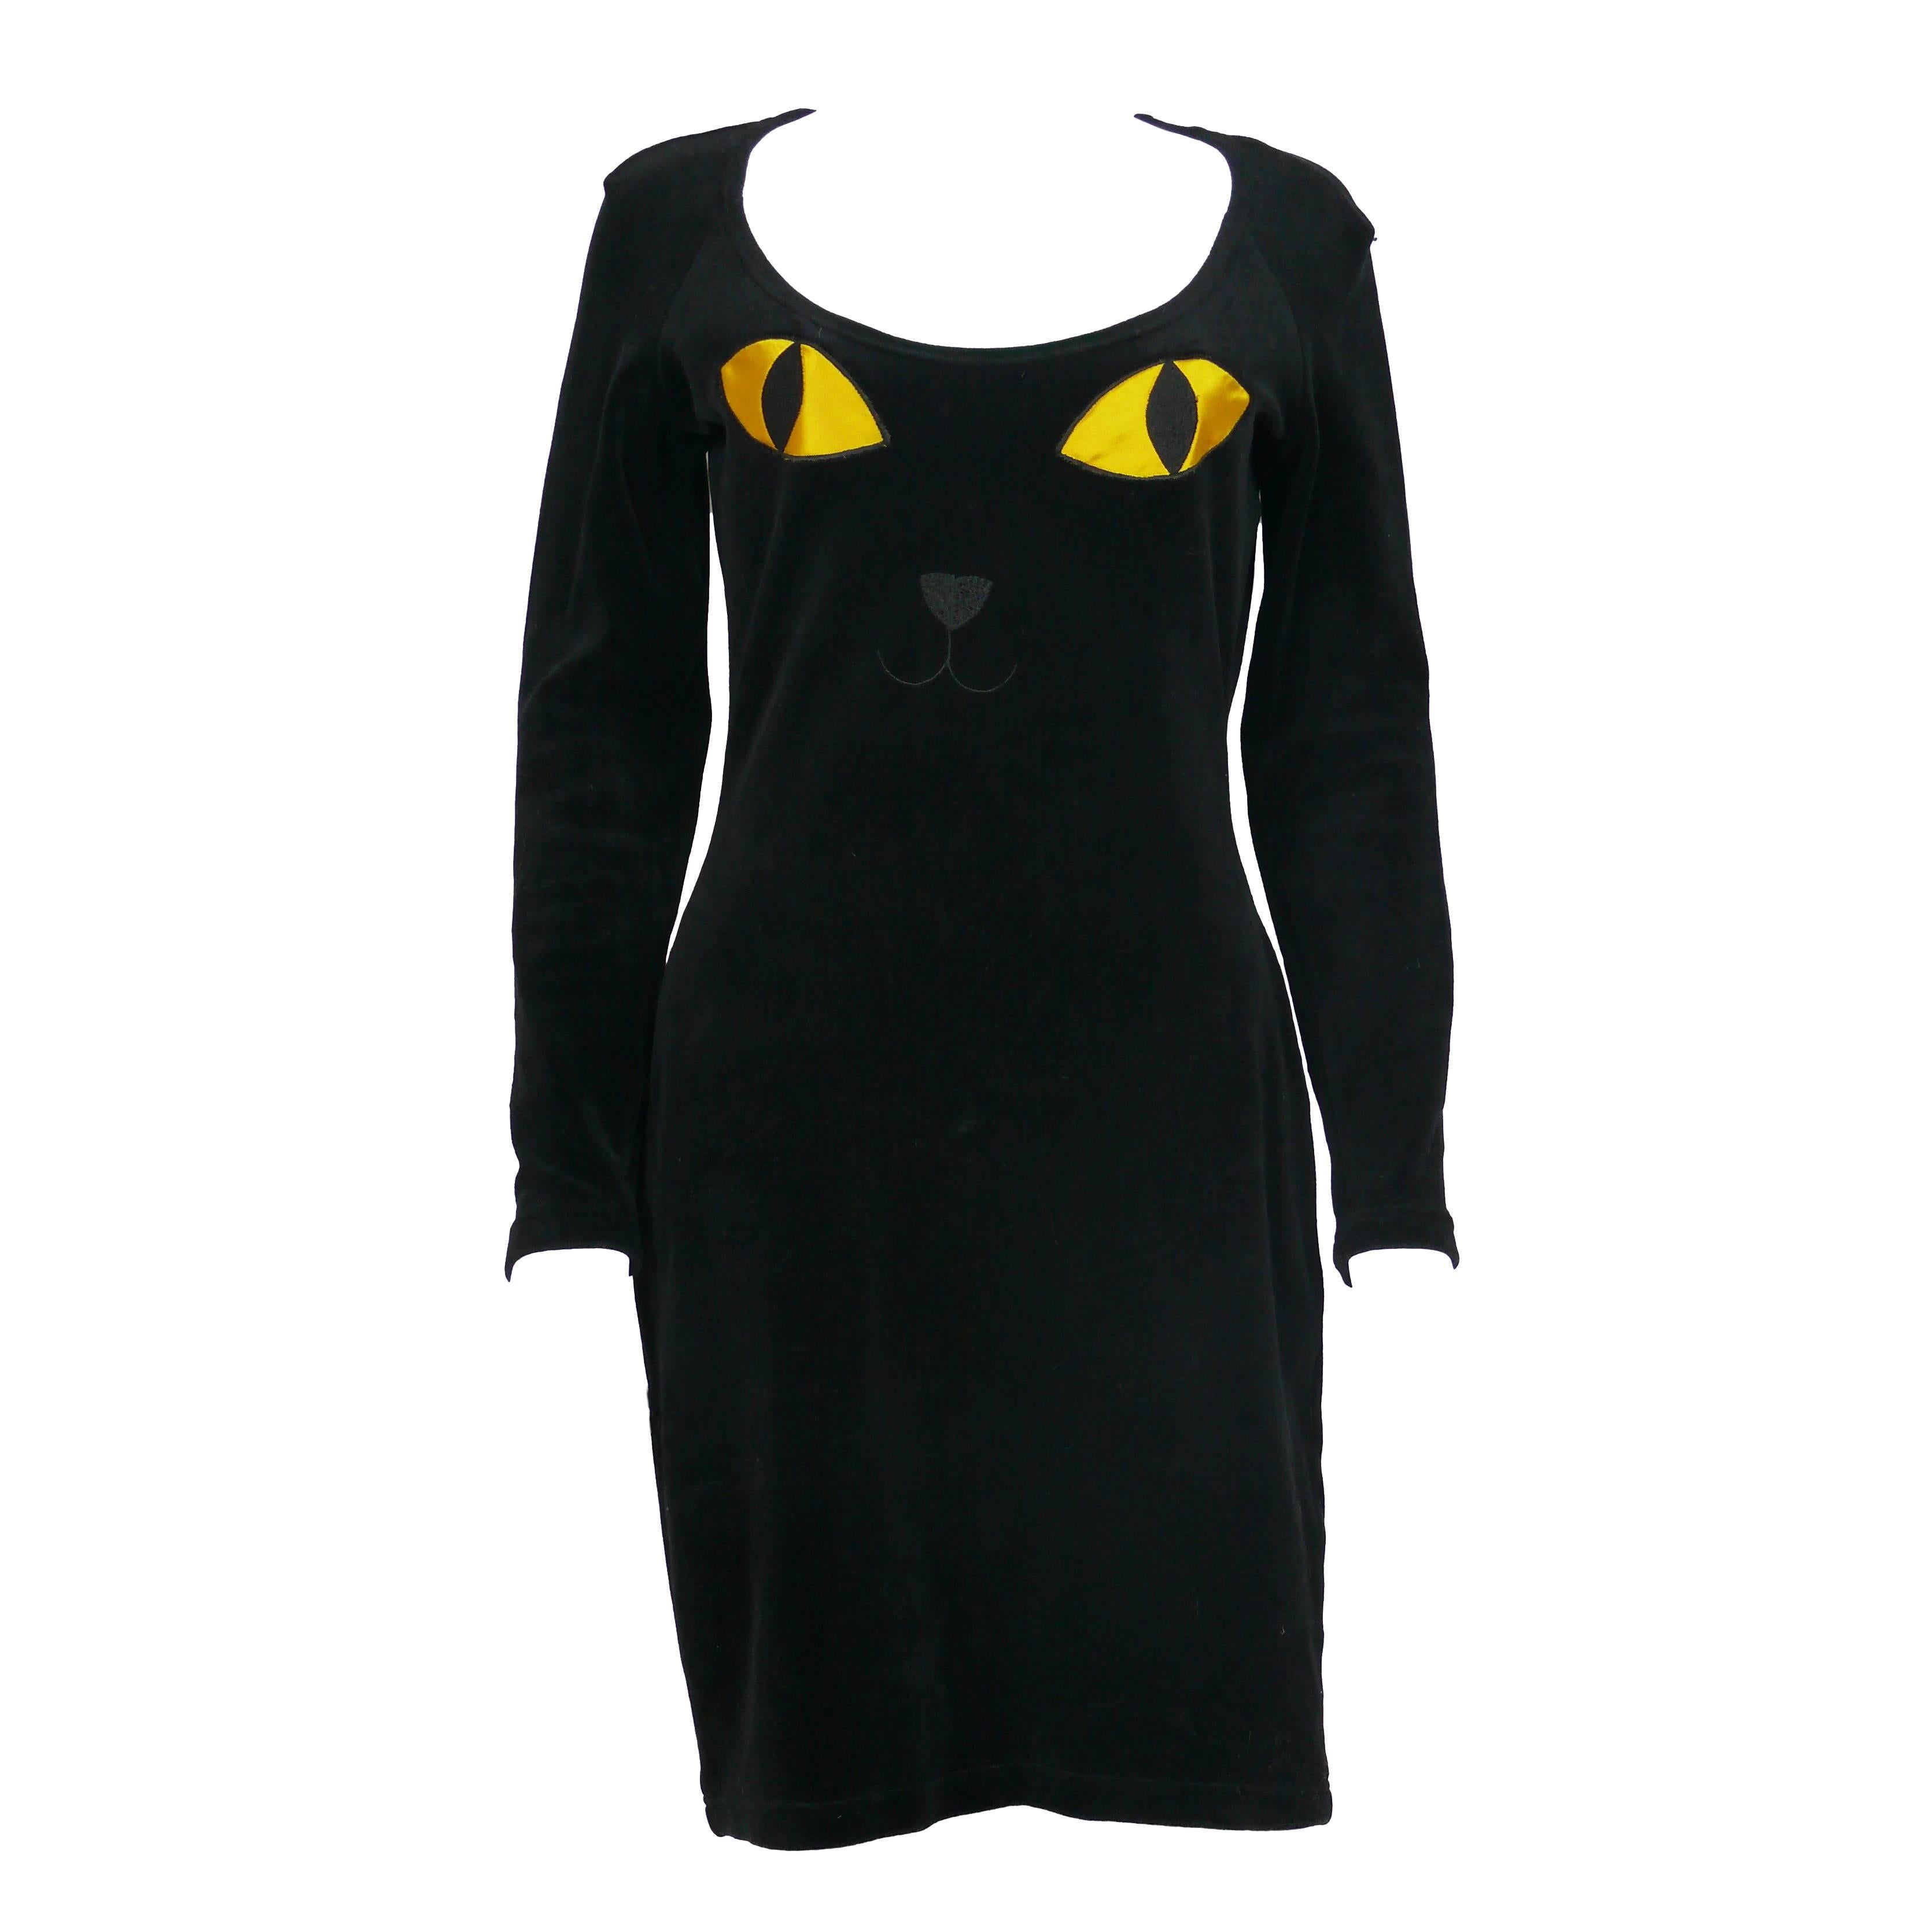 Moschino Vintage "Cat Eyes" Black Velvet Dress 1990s